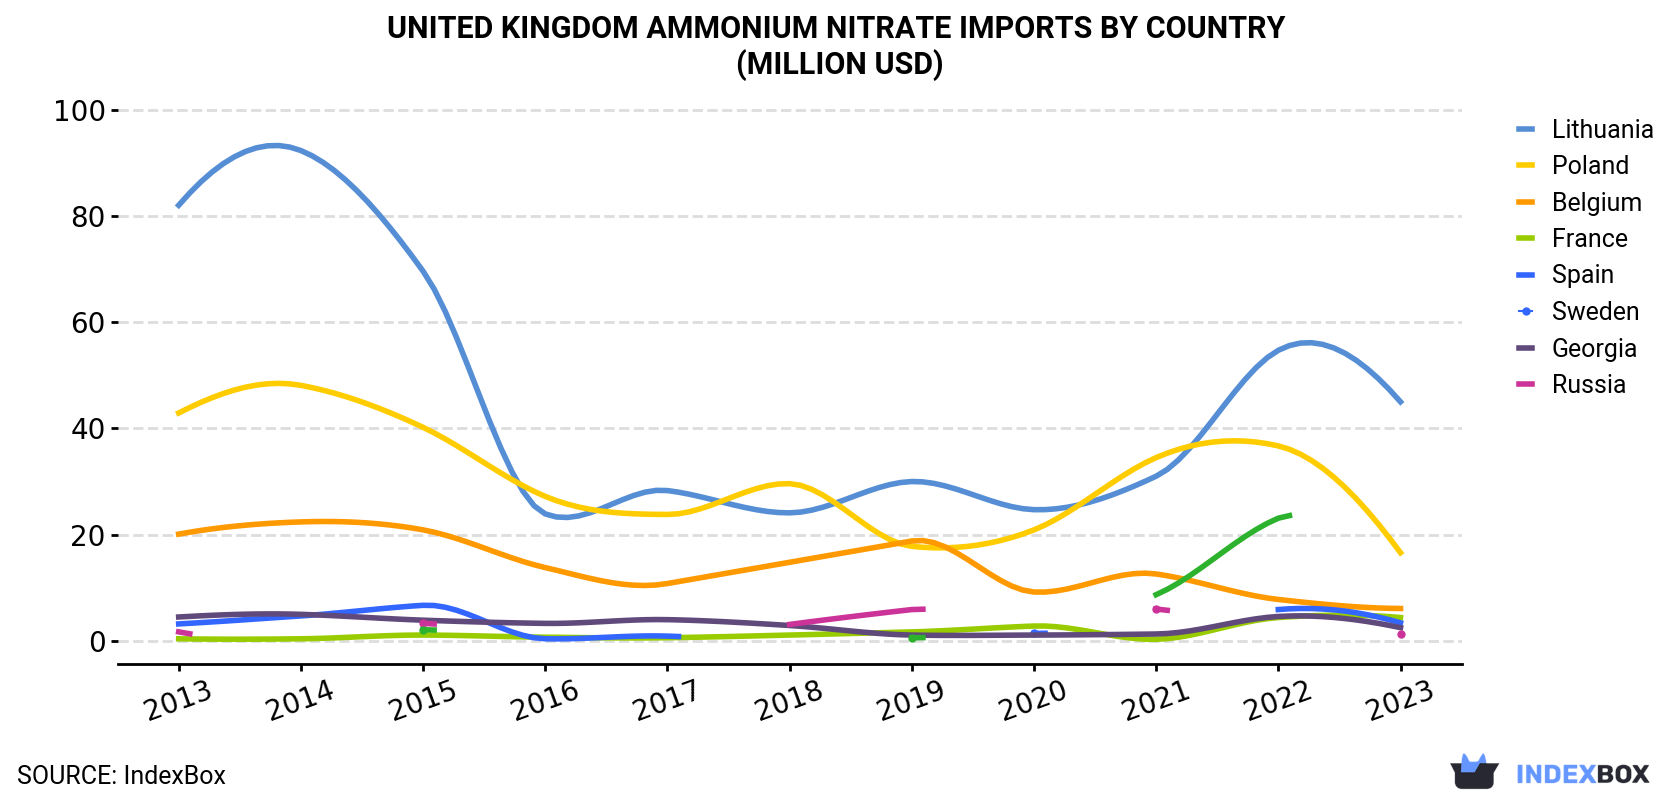 United Kingdom Ammonium Nitrate Imports By Country (Million USD)